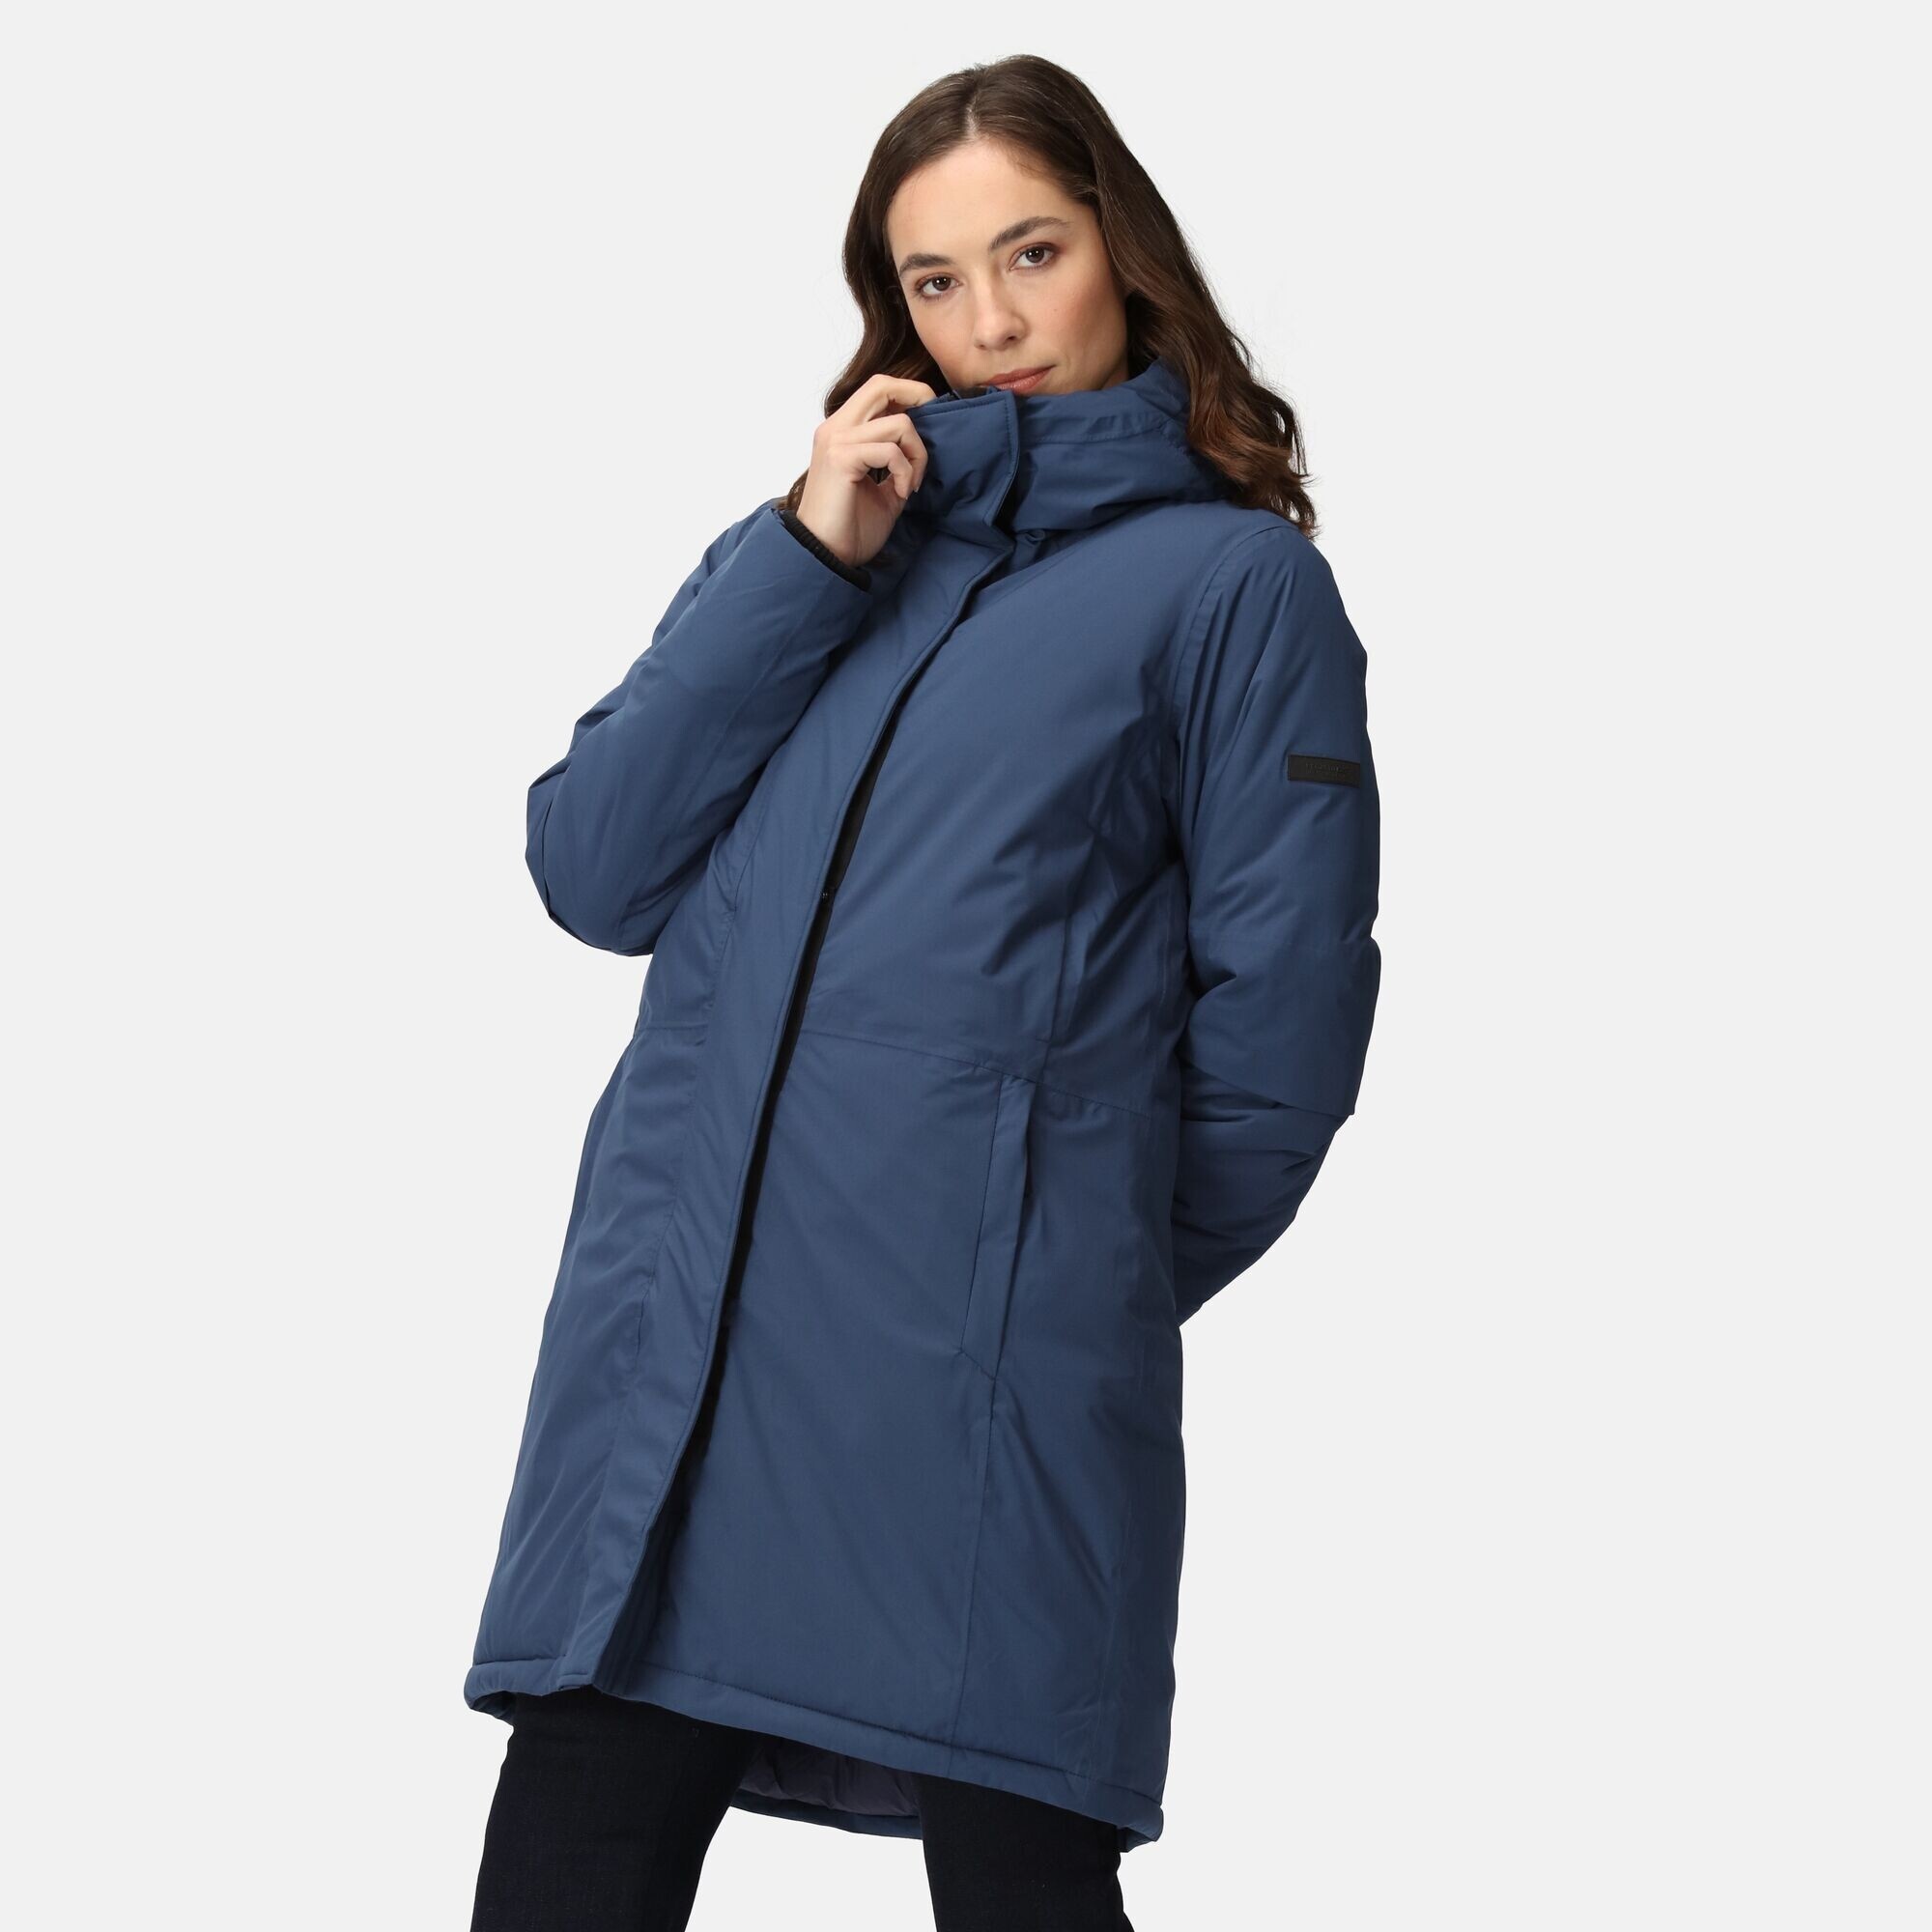 Dámský zimní kabát Yewbank III RWP384-VD4 modrý - Regatta 42